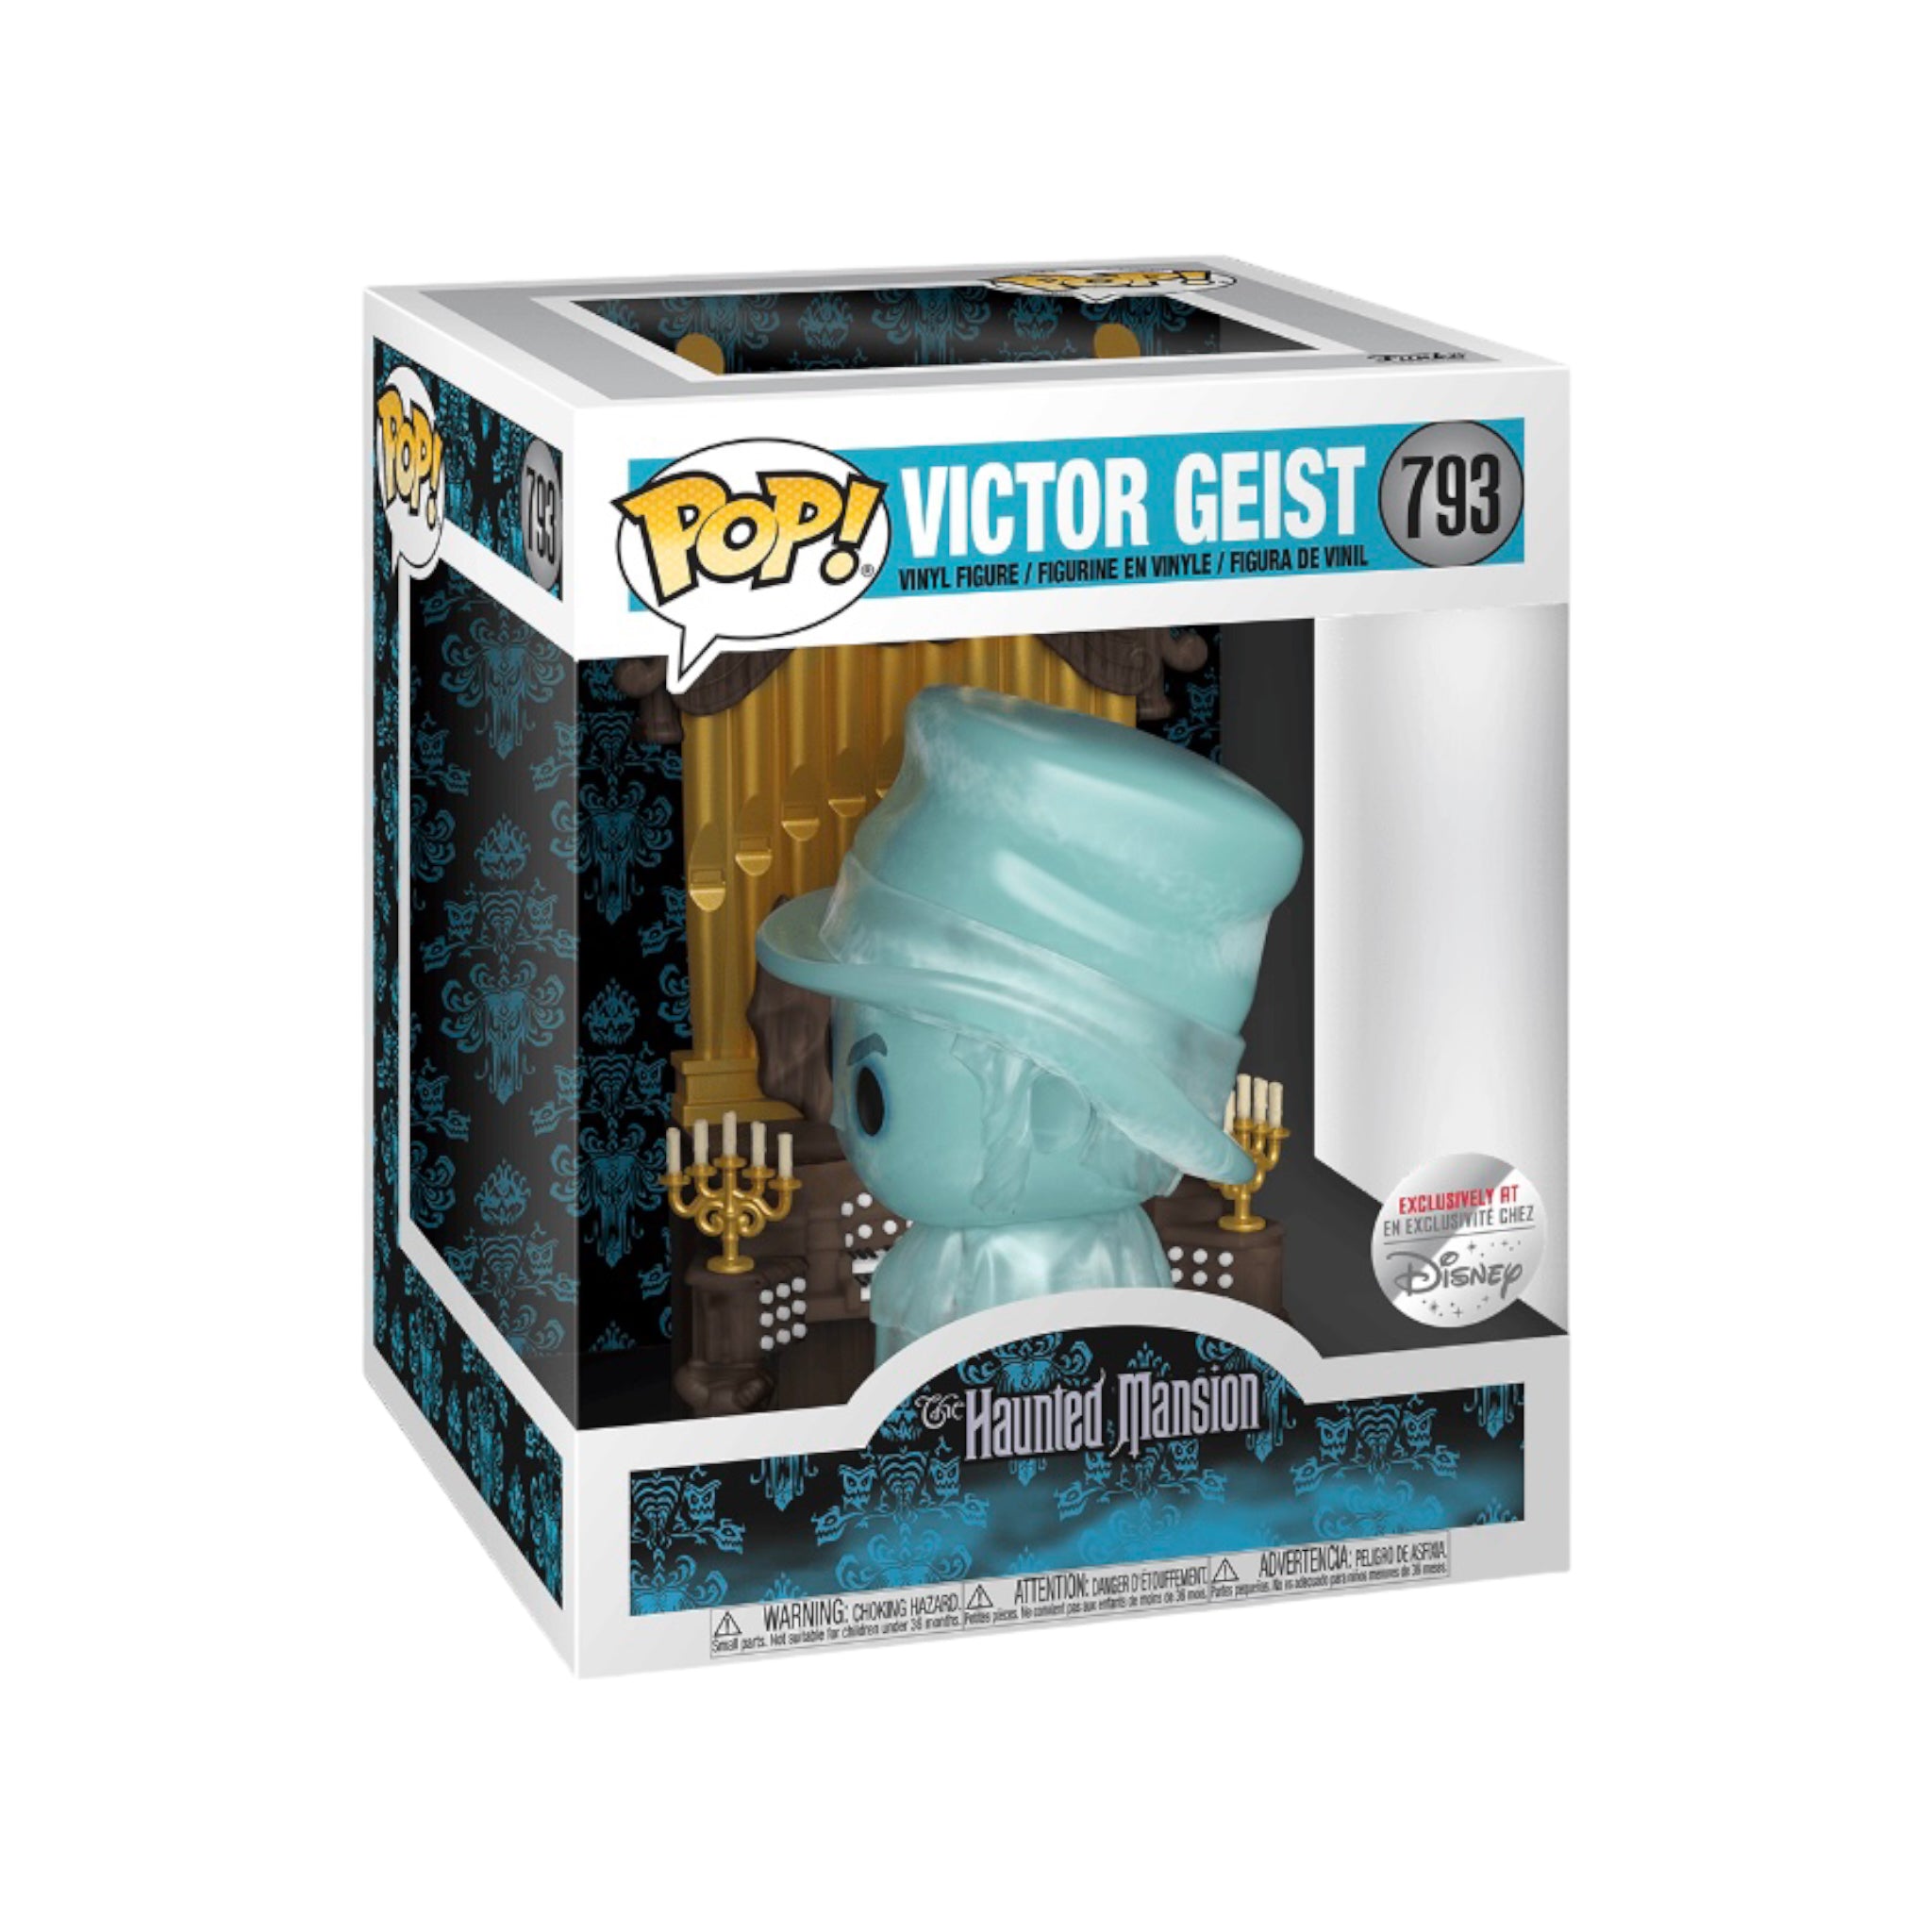 Victor Geist #793 6" Funko Pop! - The Haunted Mansion - Disney Store Exclusive